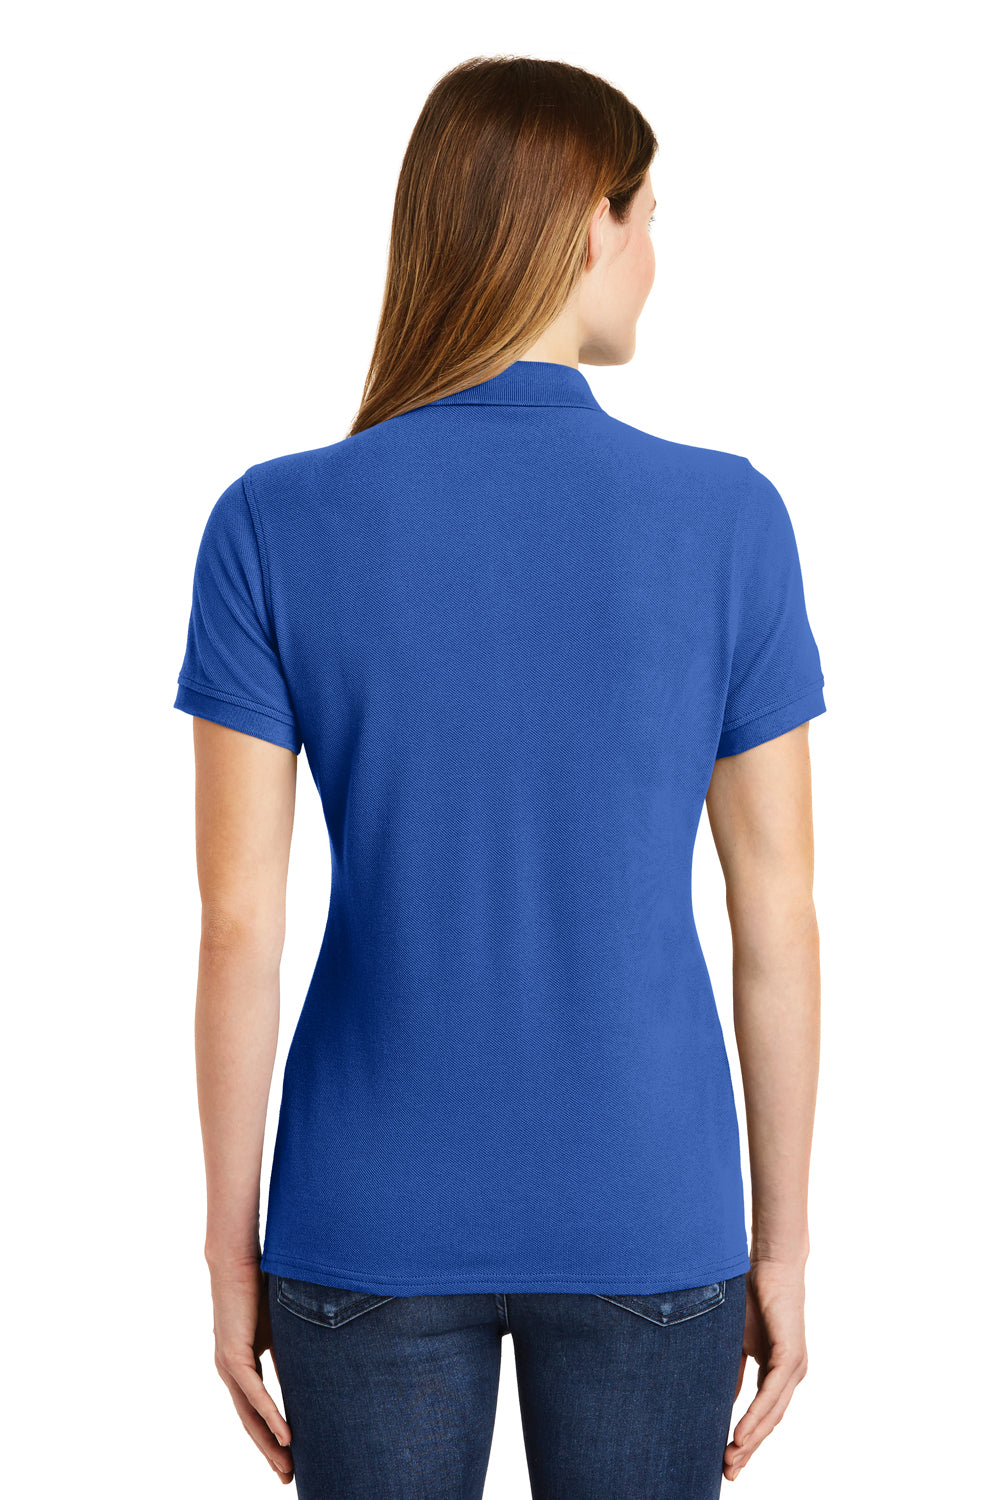 Port & Company LKP1500 Womens Stain Resistant Short Sleeve Polo Shirt Royal Blue Back